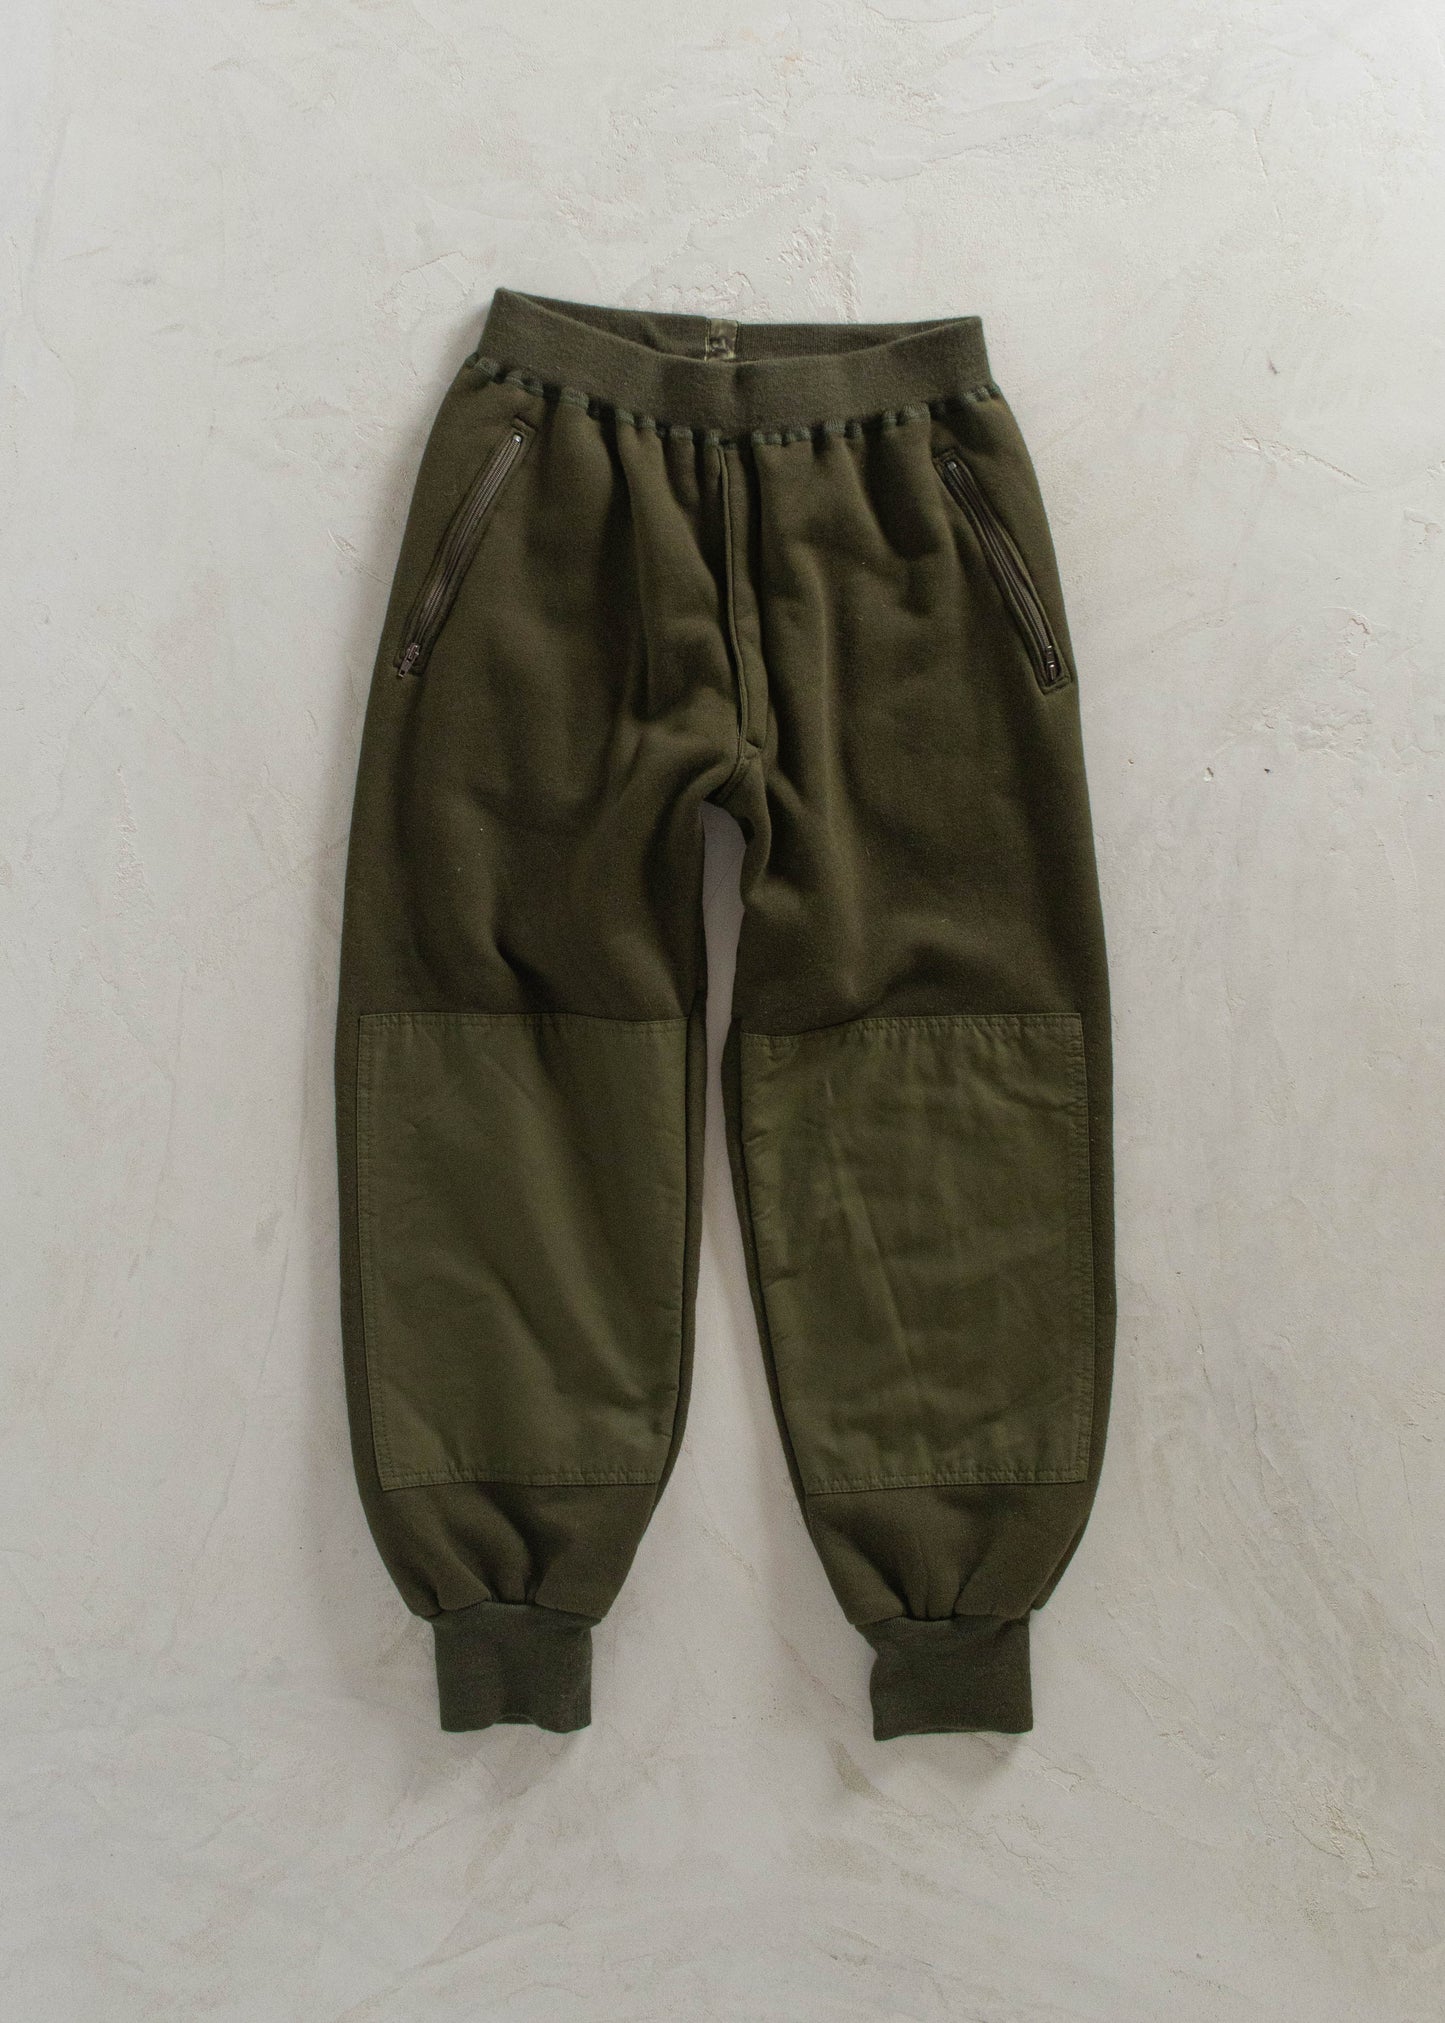 1990s Military Combat Polar Fleece Sweatpants Size S/M